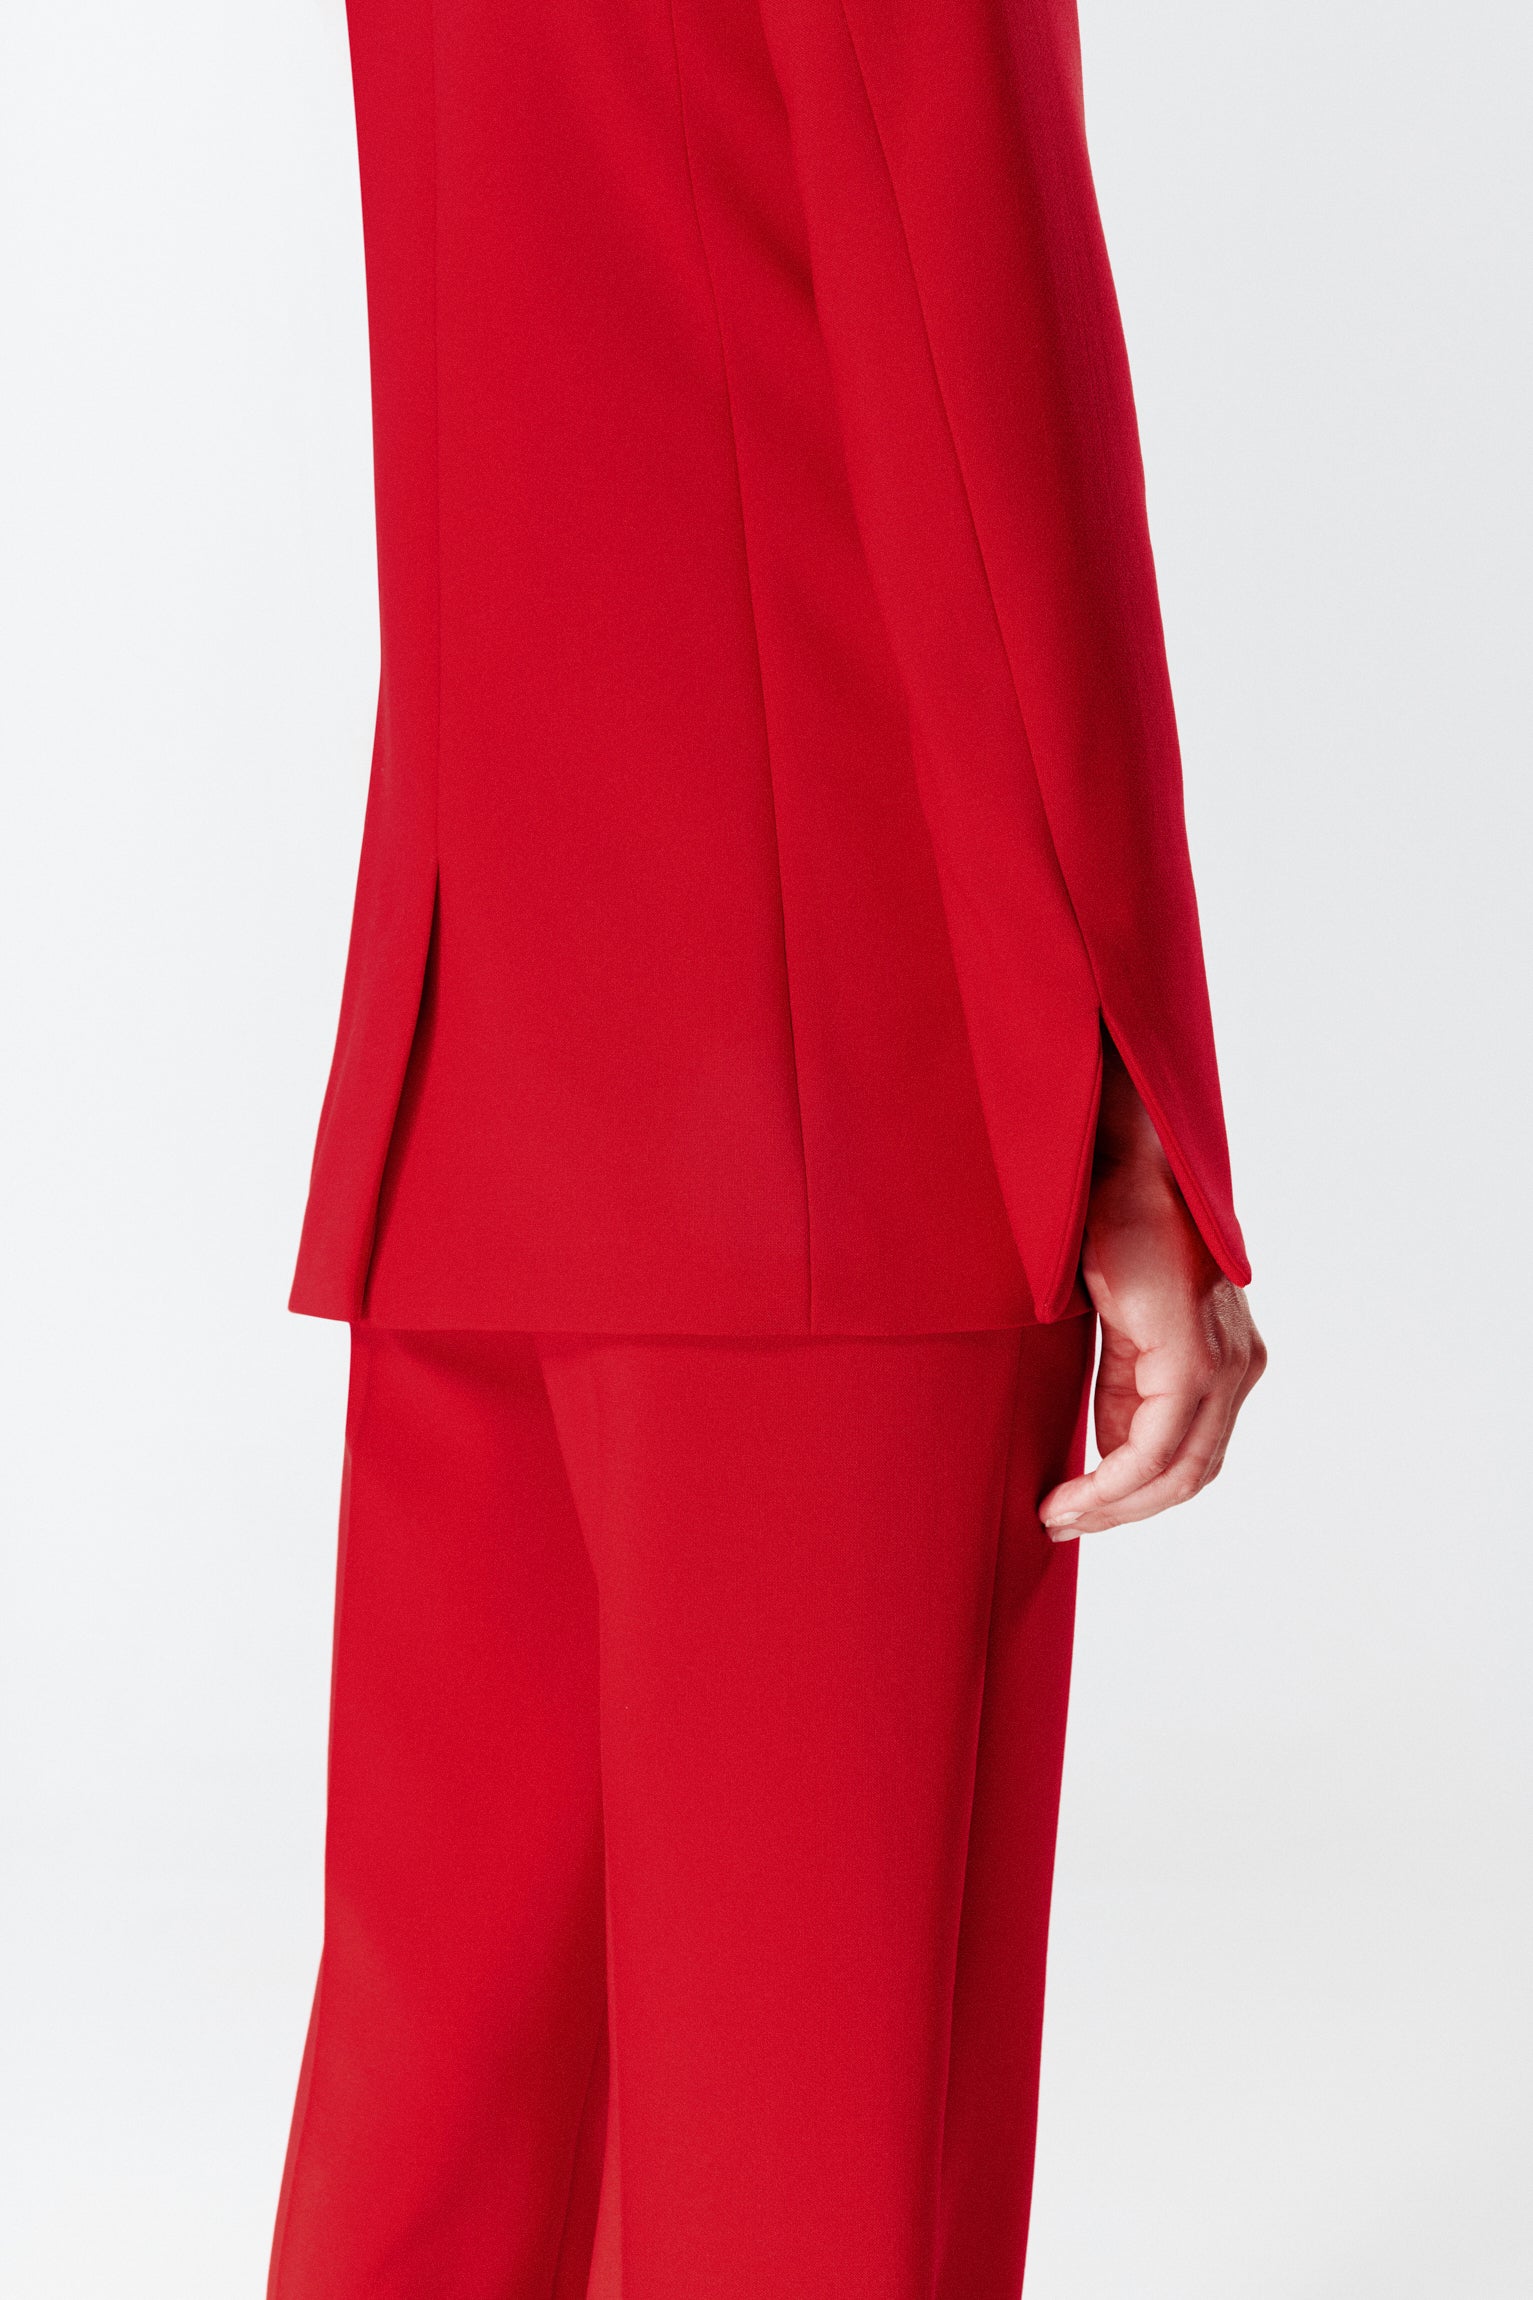 Marie-Jo RED Suit